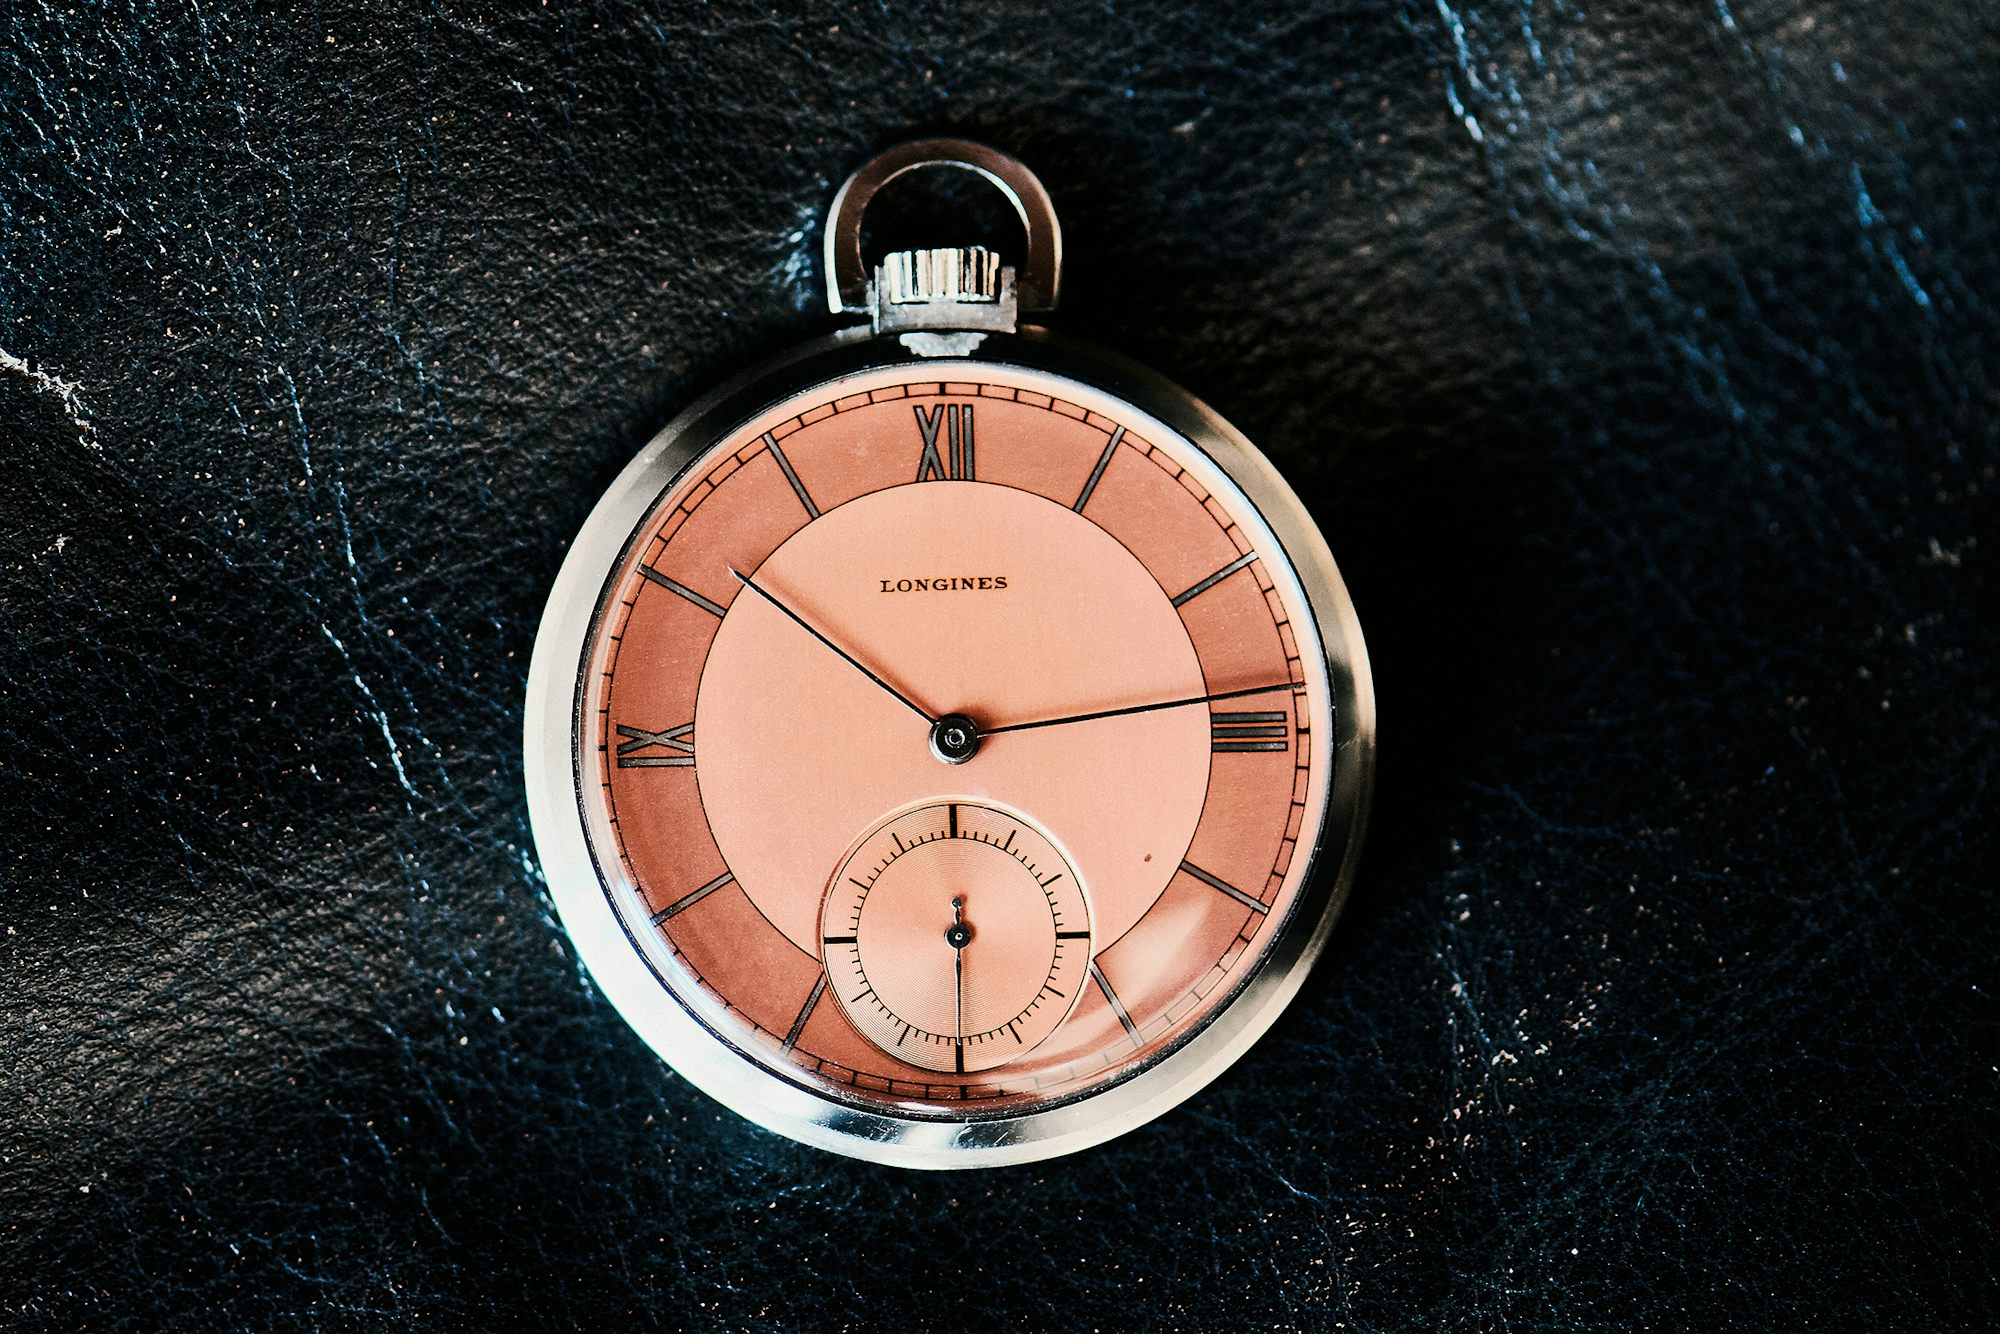 Joël Laplace's Longines Pocket Watch